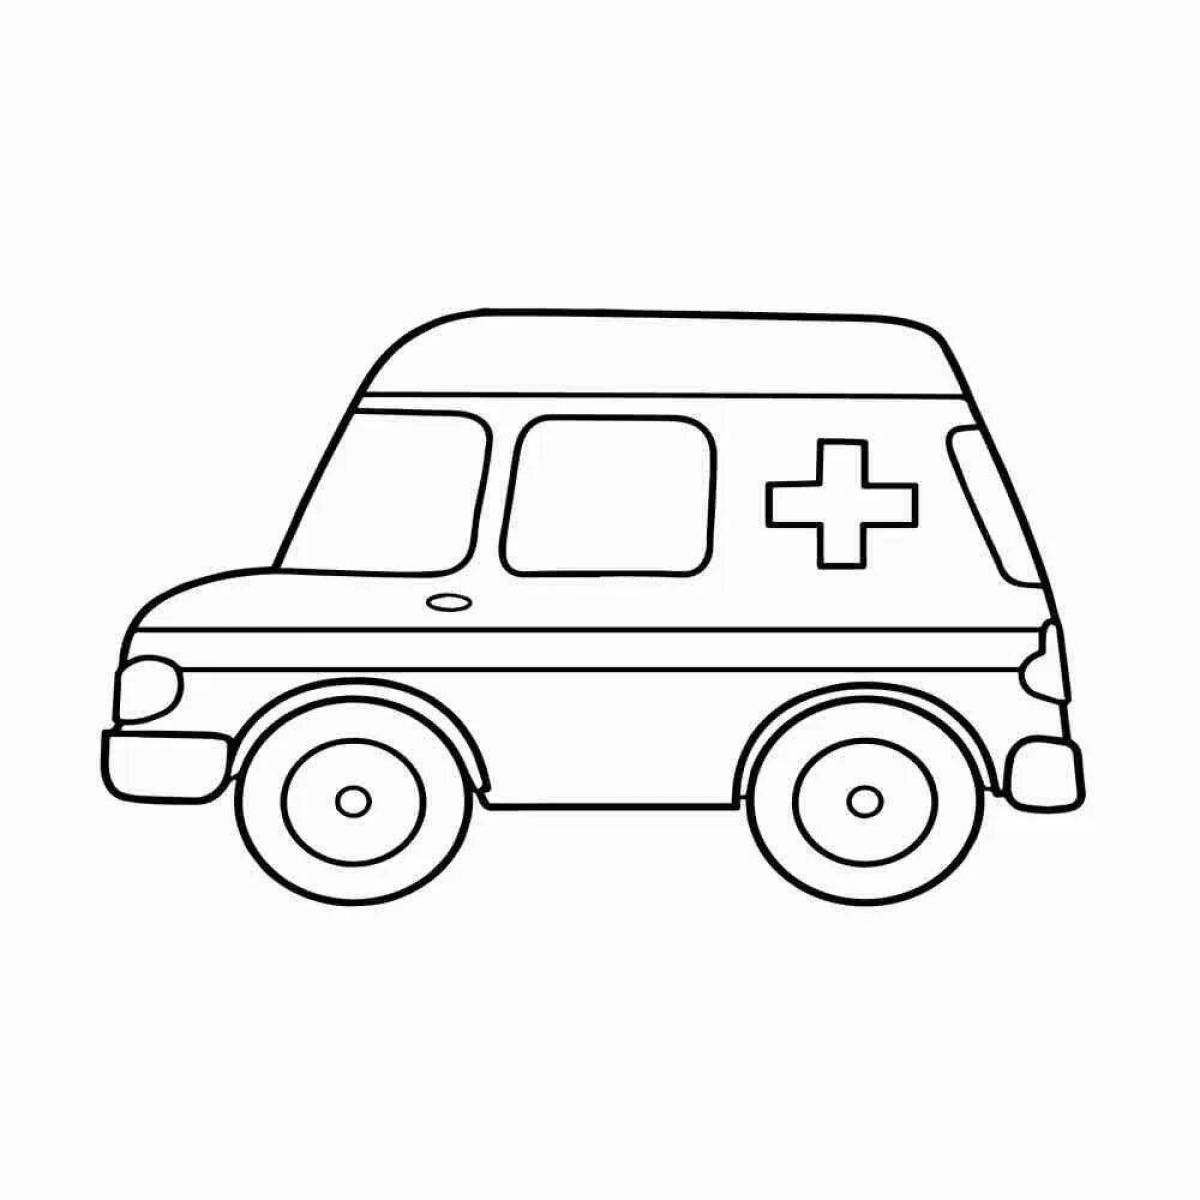 Dynamic ambulance coloring page